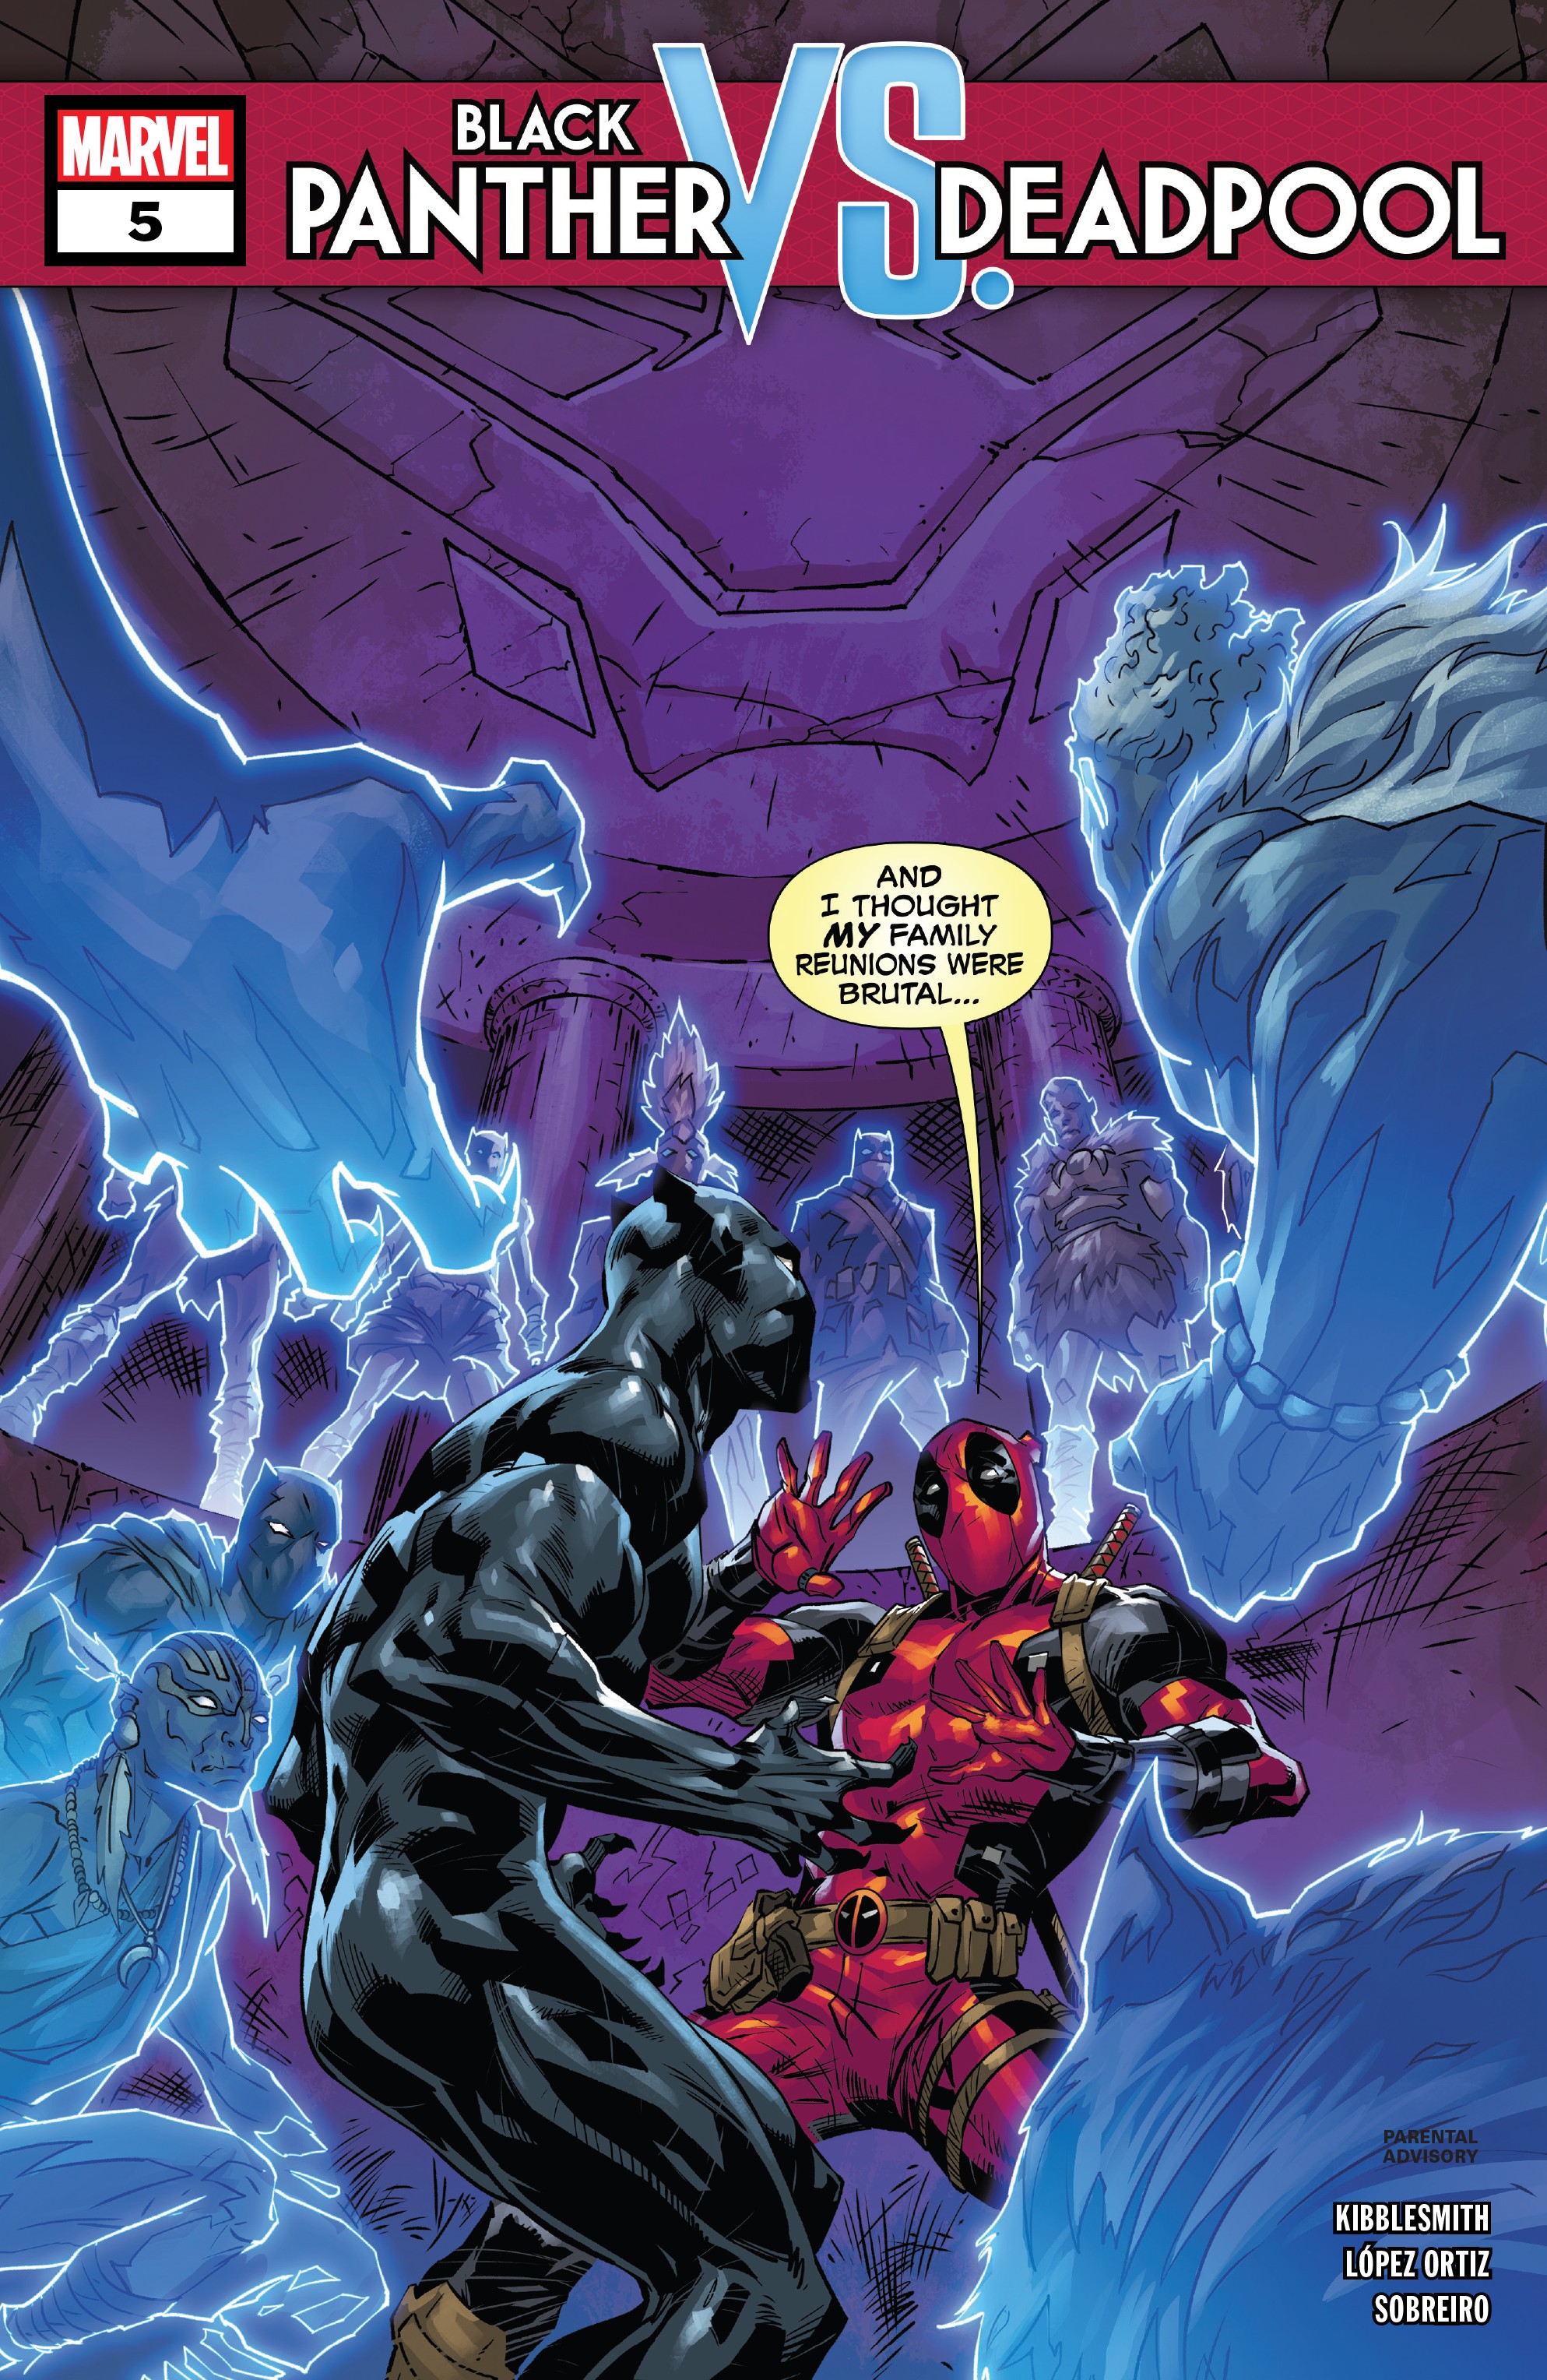 Batman Vs Deadpool Sexx - Black Panther Vs Deadpool Issue 5 | Read Black Panther Vs Deadpool Issue 5  comic online in high quality. Read Full Comic online for free - Read comics  online in high quality .|viewcomiconline.com